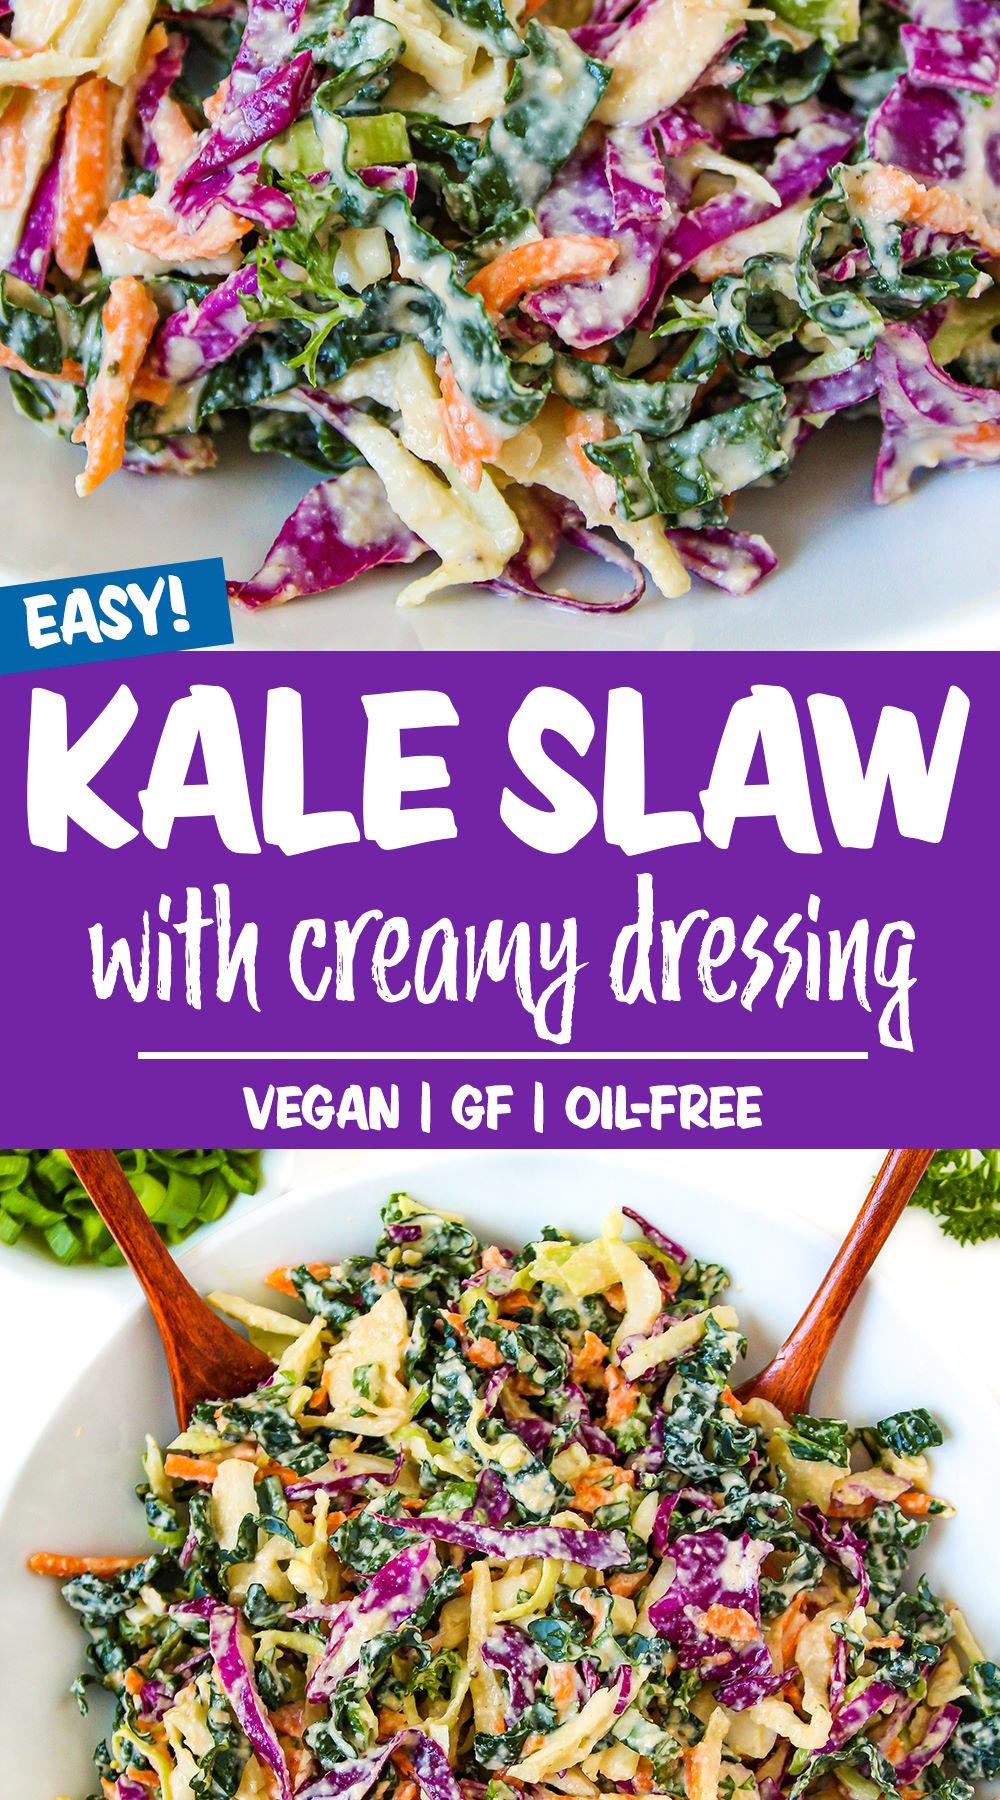 Kale Slaw with Creamy Dressing (Vegan!) - The Garden Grazer